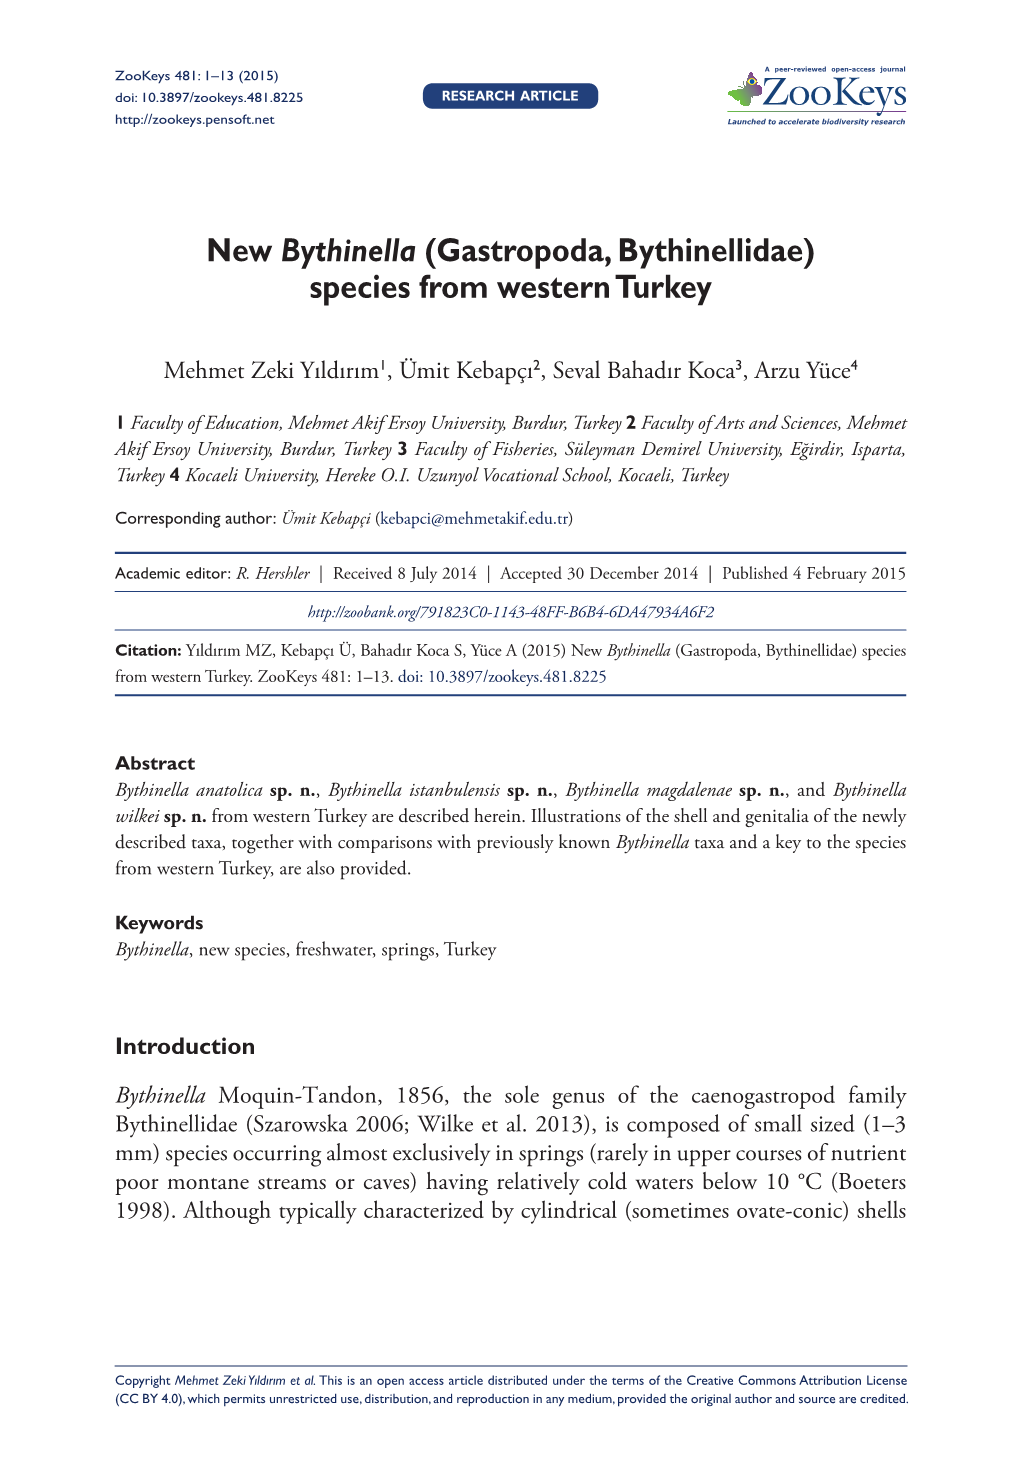 New Bythinella (Gastropoda, Bythinellidae) Species from Western Turkey